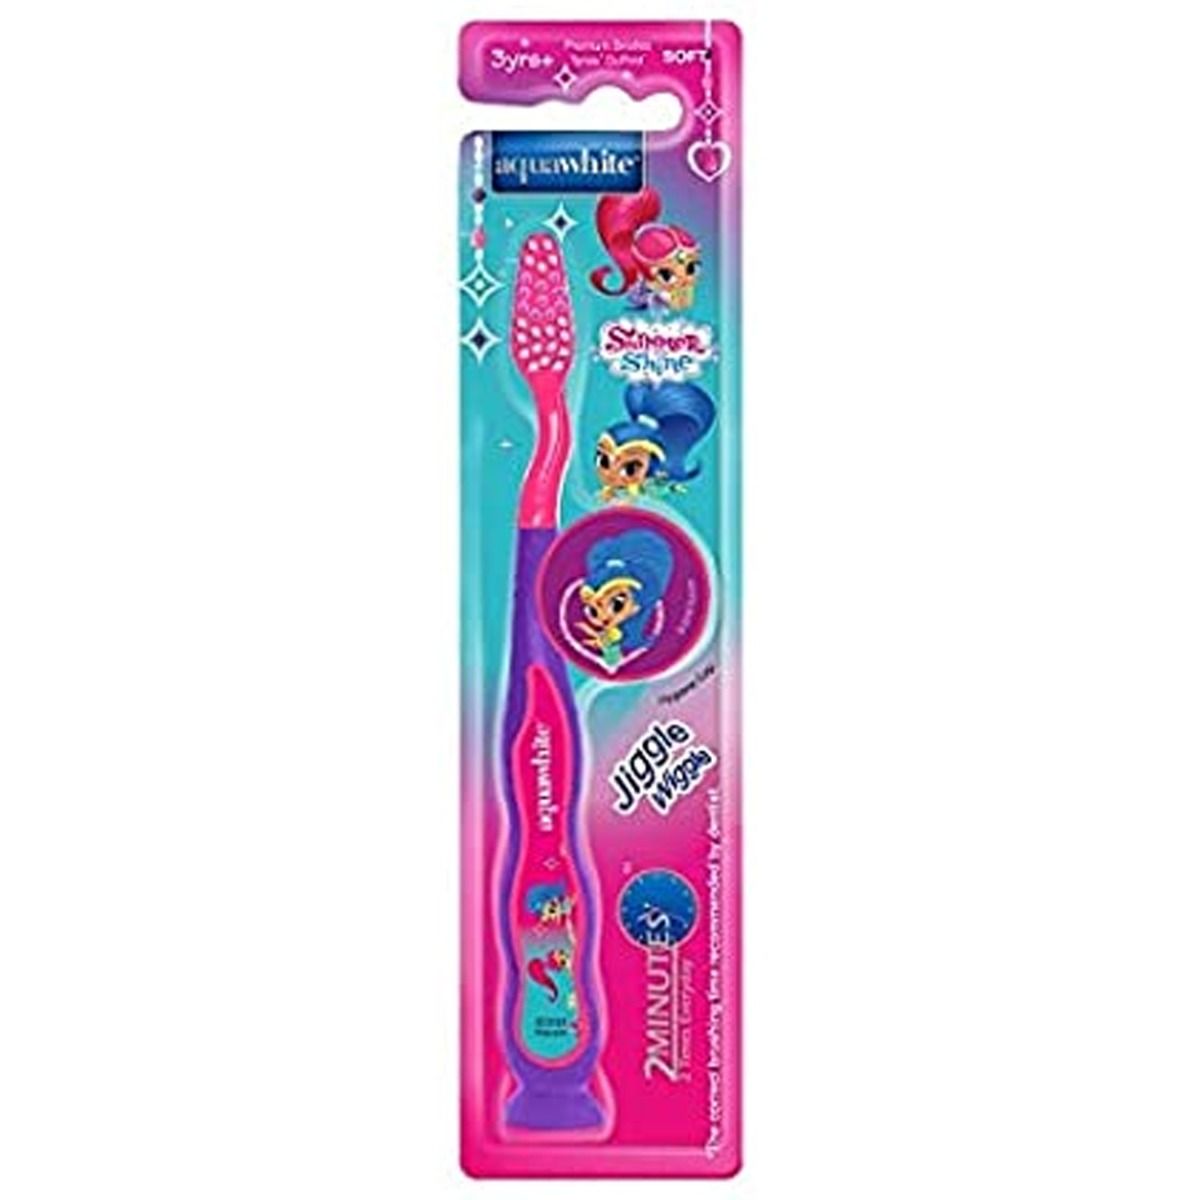 Buy Aquawhite Shimmer&Shine Jiggle Wiggle Toothbrush, 1 Count Online